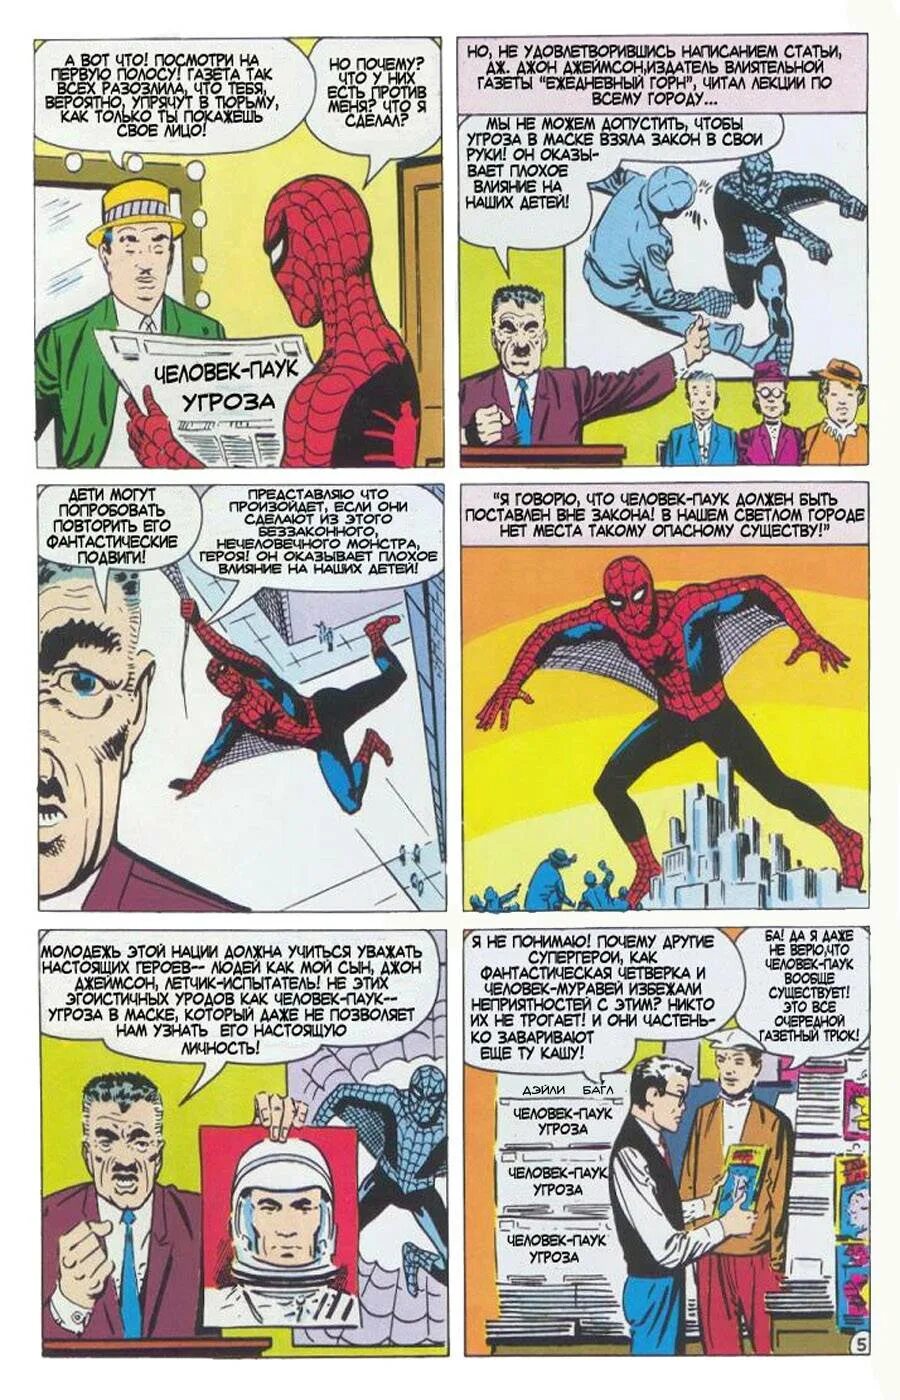 Spider-man #1 комиксы страниц. Человек паук комикс страница. Страница комикса. Удивительный человек паук комикс. Читать комиксы удивительный